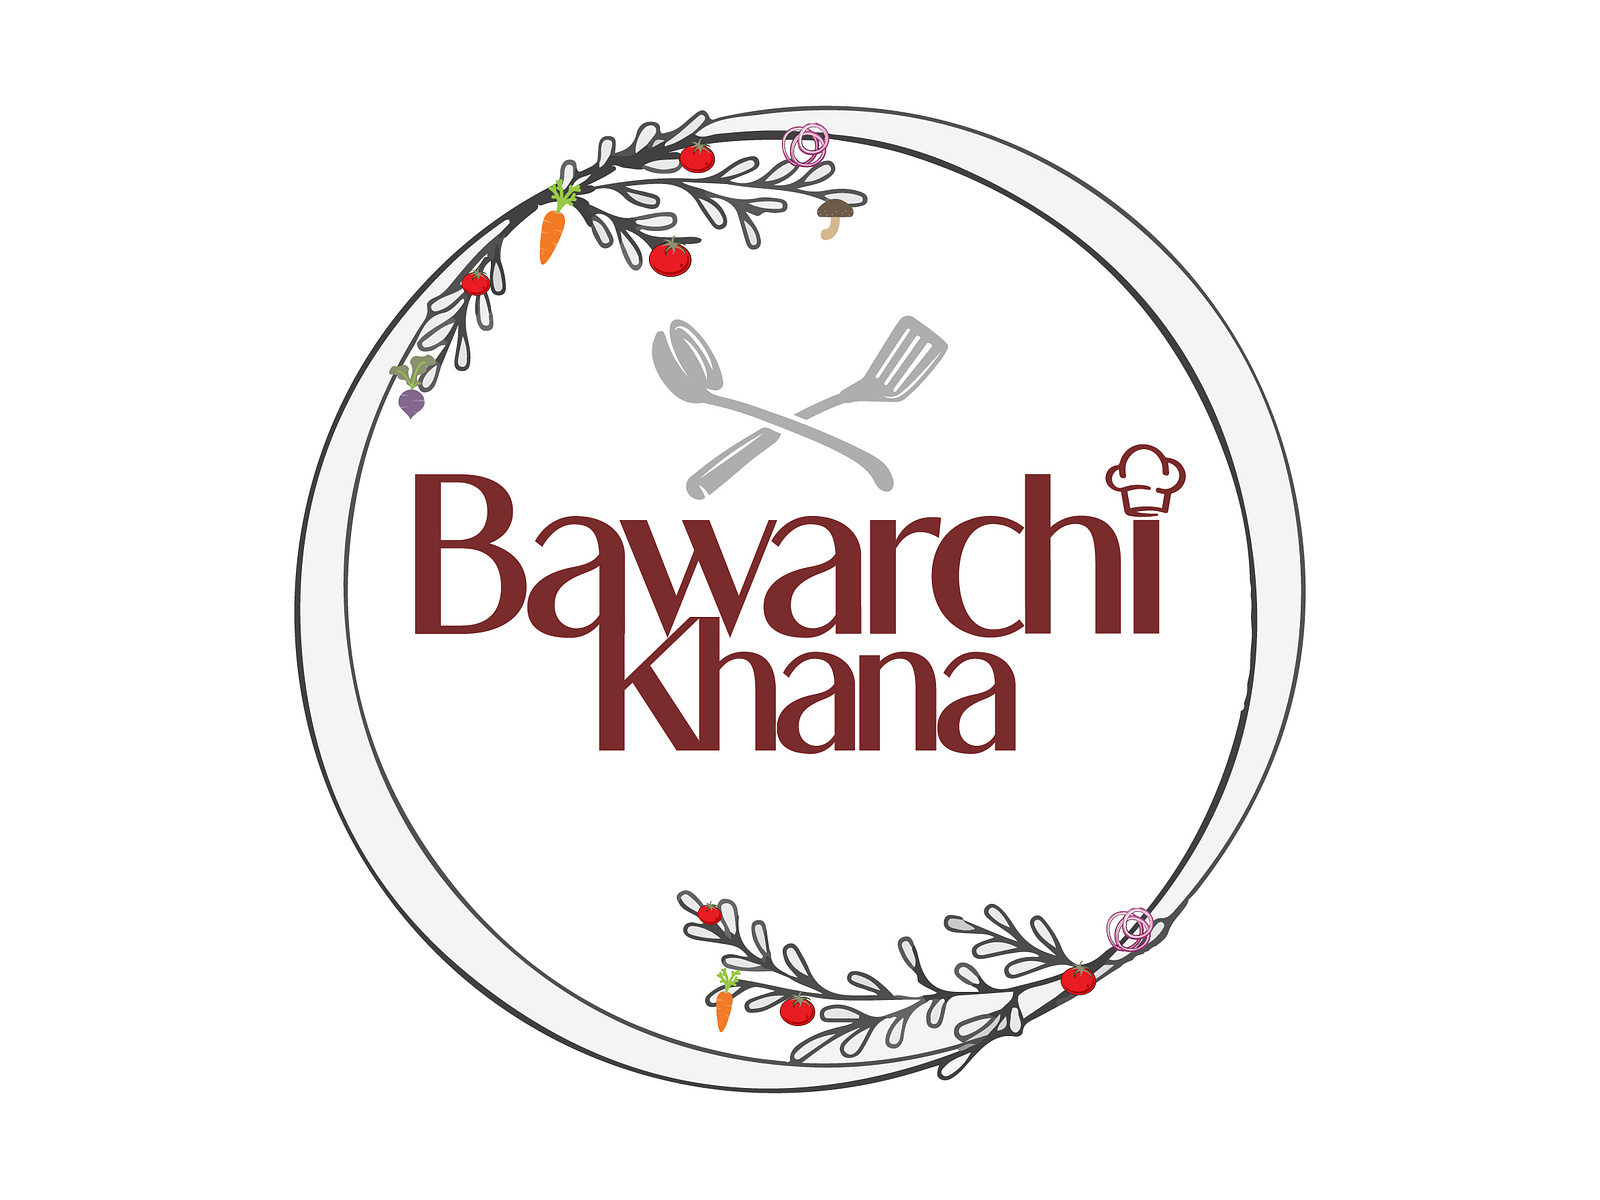 Bawarchi Khana by Ramsha Dalvi on Dribbble